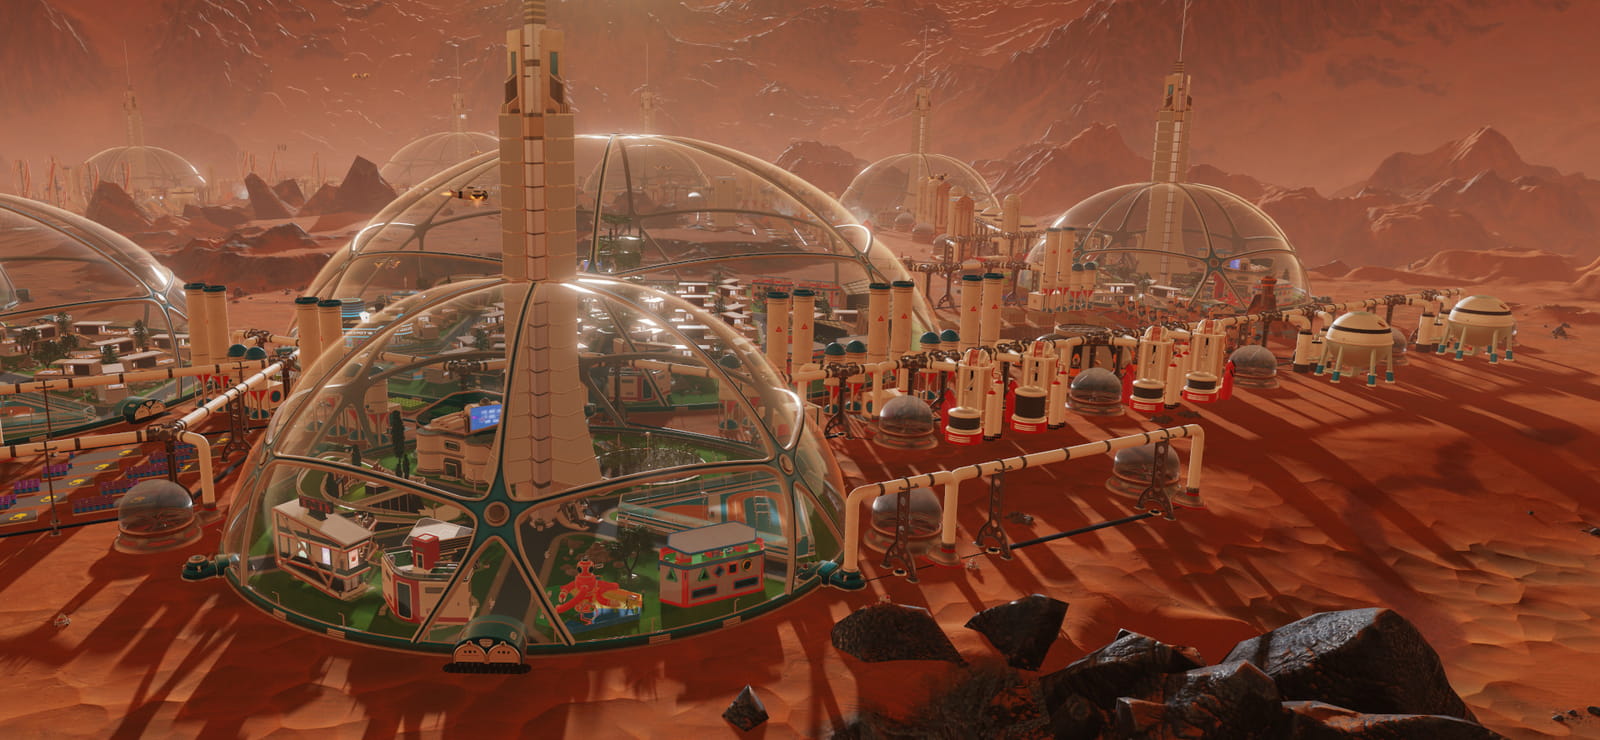 Surviving Mars - Stellaris Dome Set